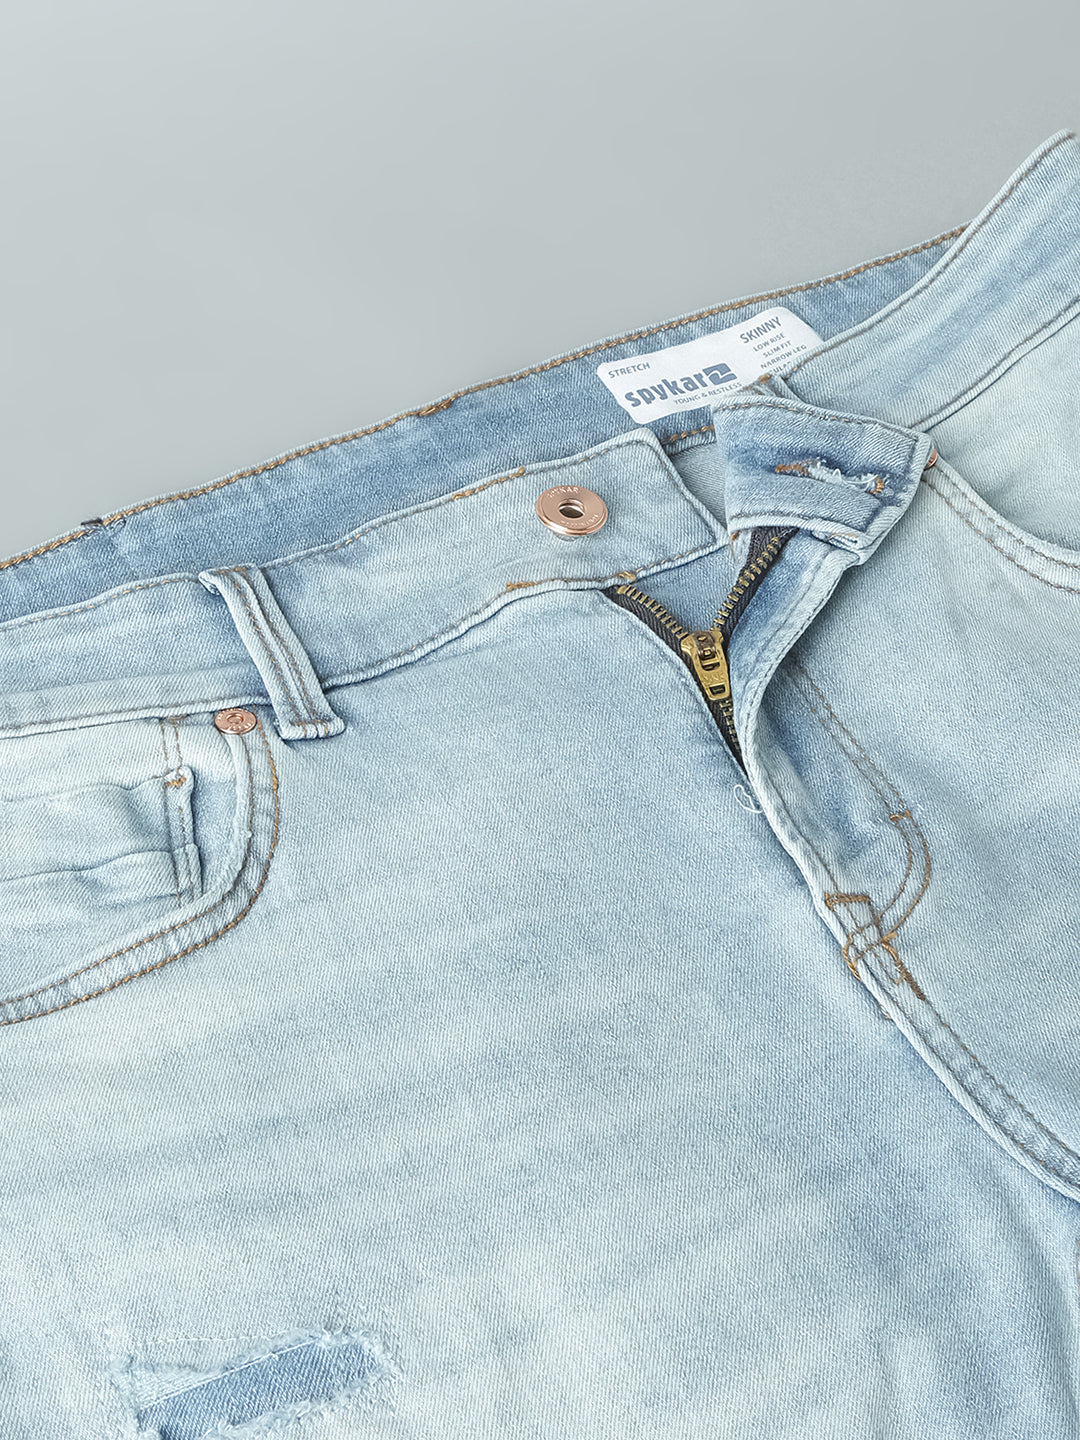 Spykar Limited Edition Light Blue Slim Fit Narrow Length Low rise Knee Slit Premium Stretchable Denim Jeans For Men (Skinny)